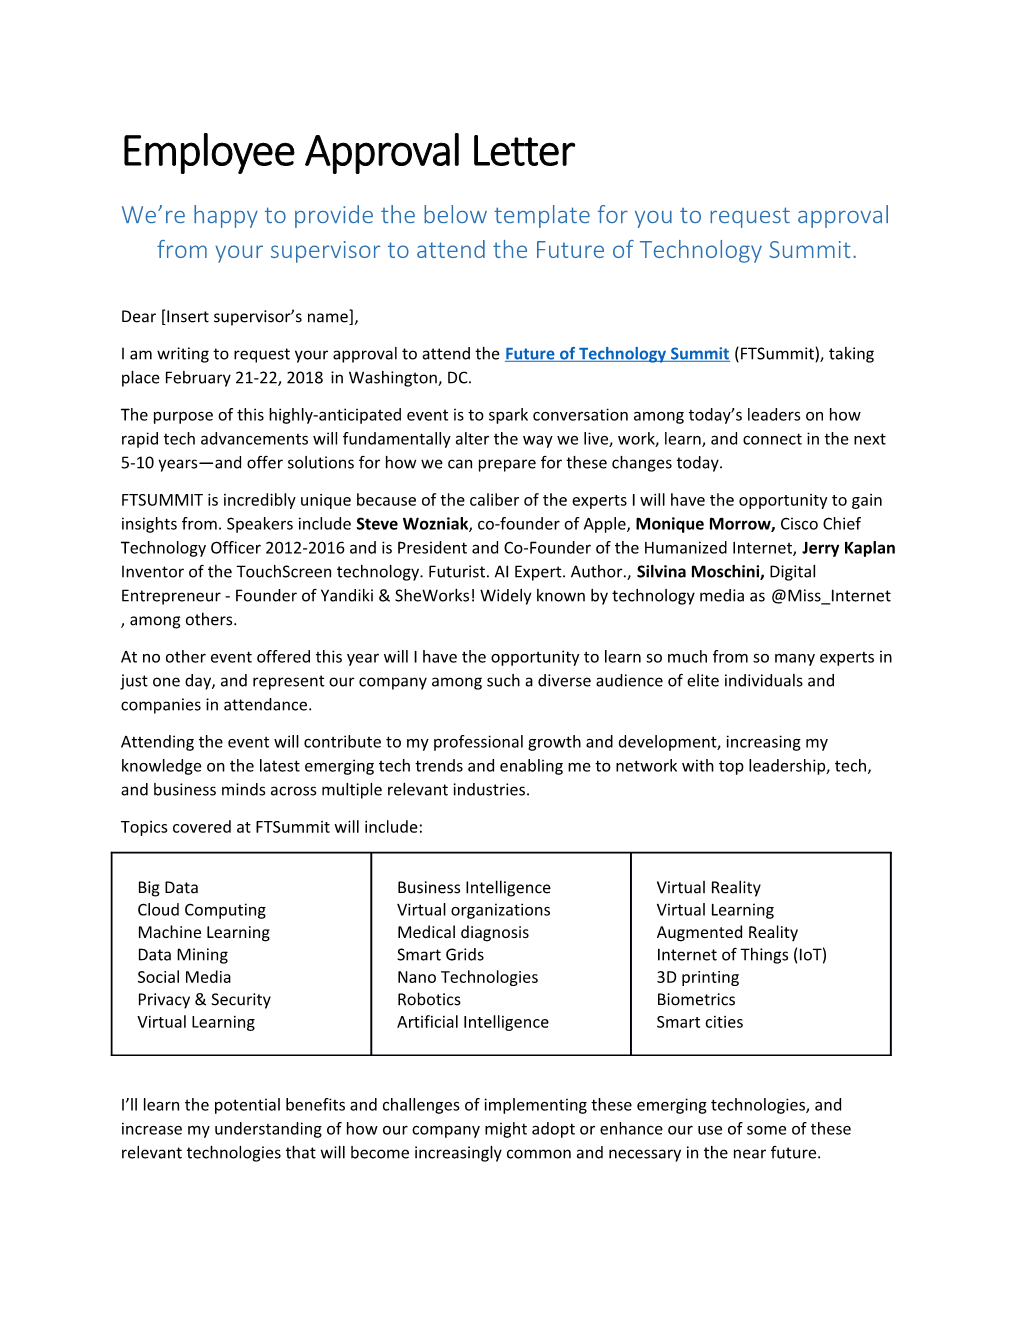 Employee Approval Letter